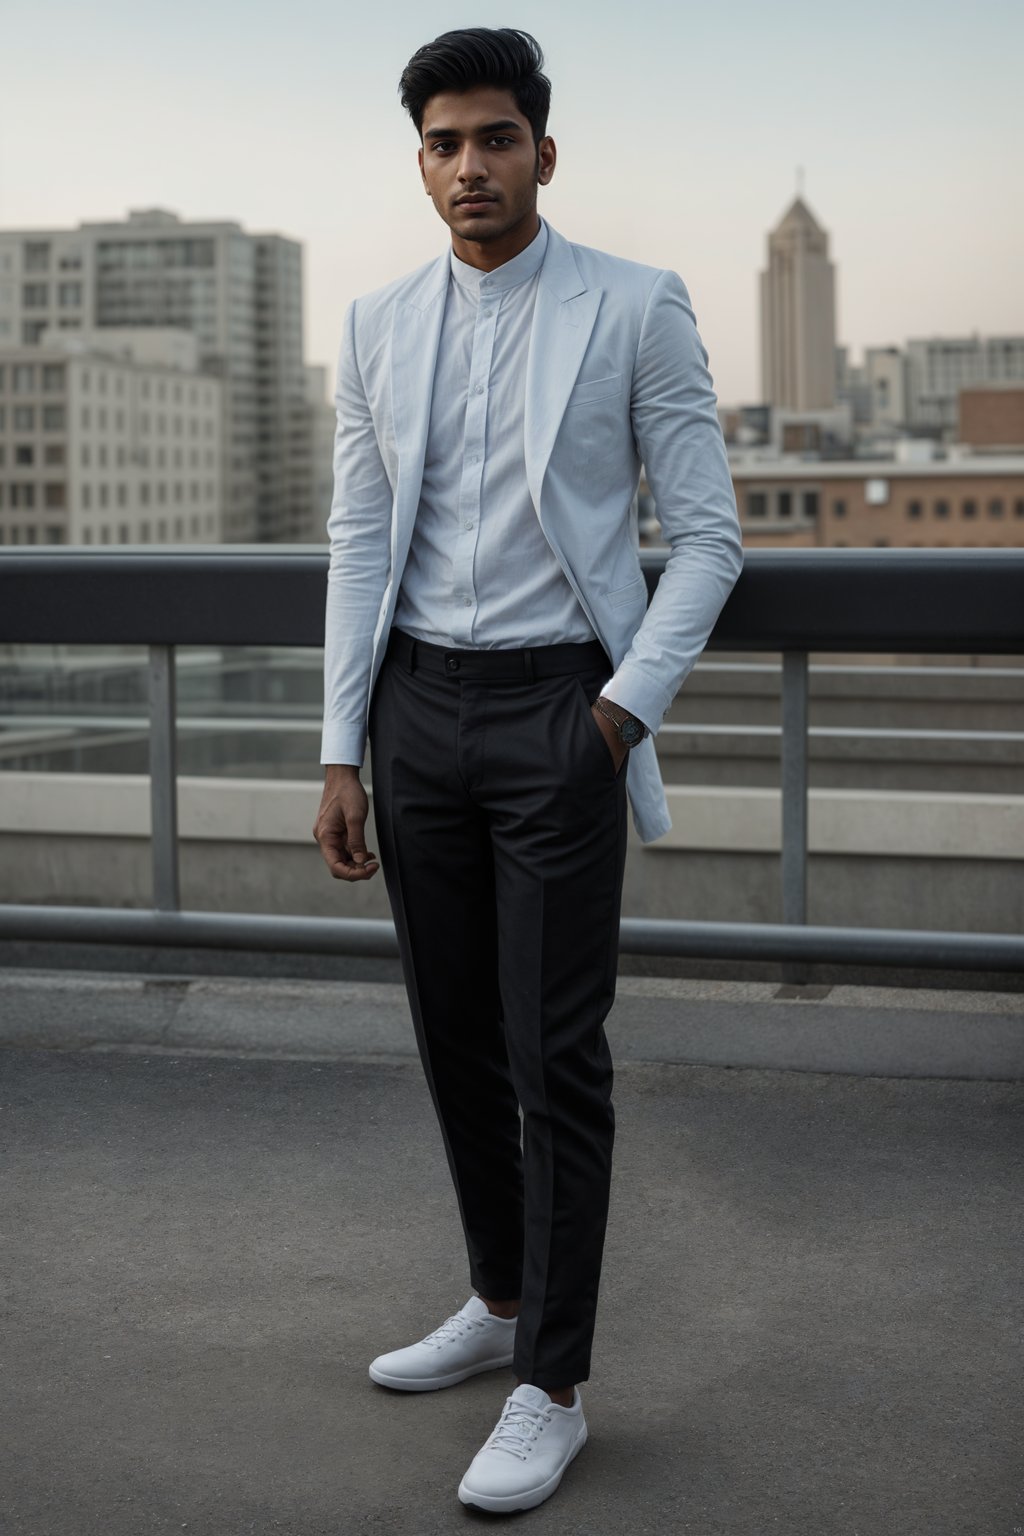 man in  modern, fashionable attire against an edgy urban backdrop